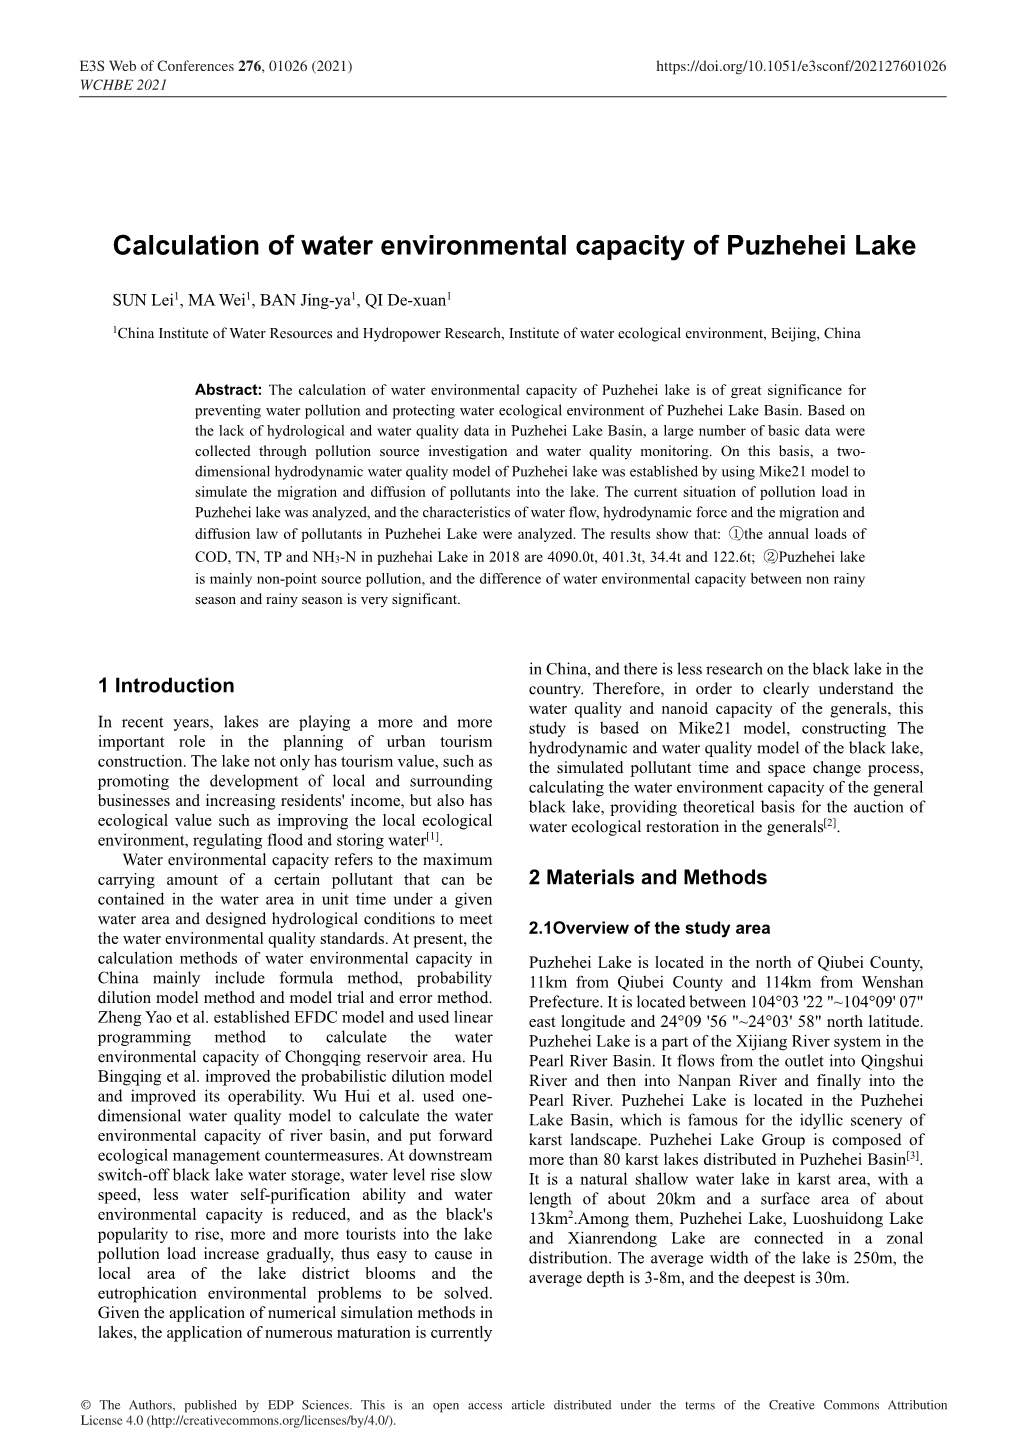 Calculation of Water Environmental Capacity of Puzhehei Lake